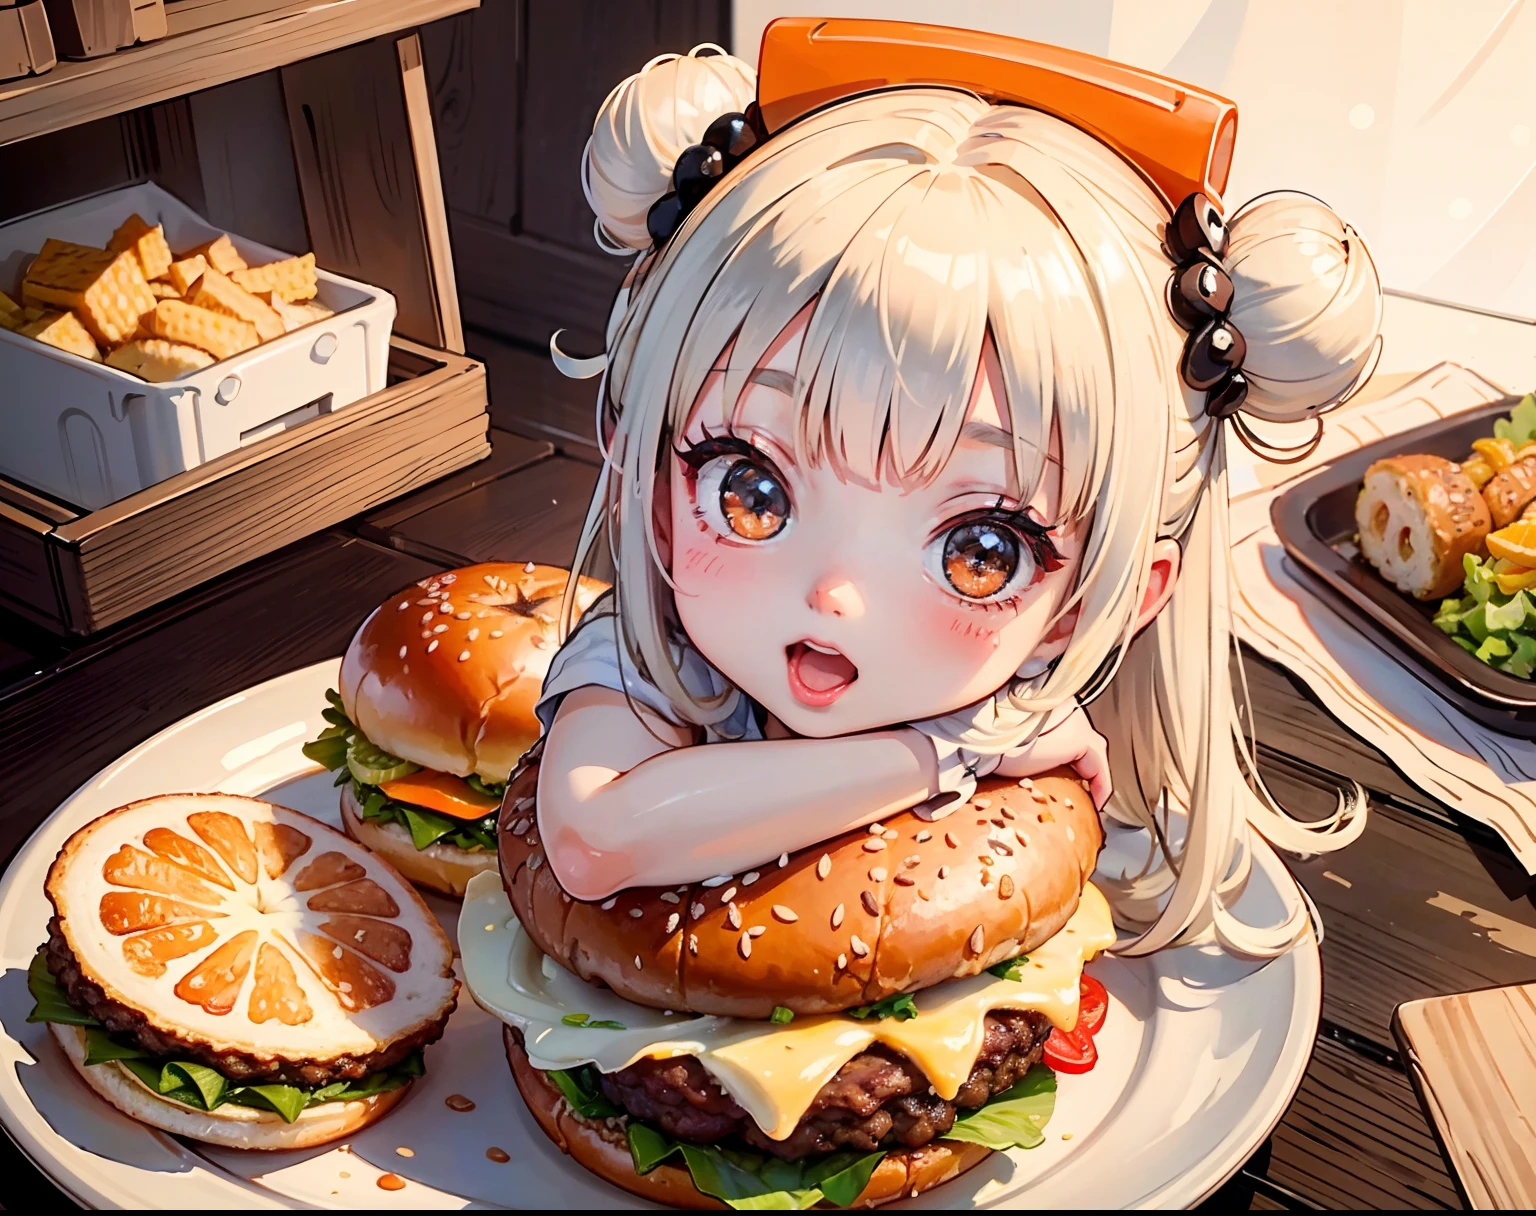 An ultra-realistic and mouthwatering hamburger 杰作, 一个小女孩窝在发髻里, 展示汉堡的多汁口感, 柔和的橙色灯光, 杰作, 高质量, 肯德基, v我50